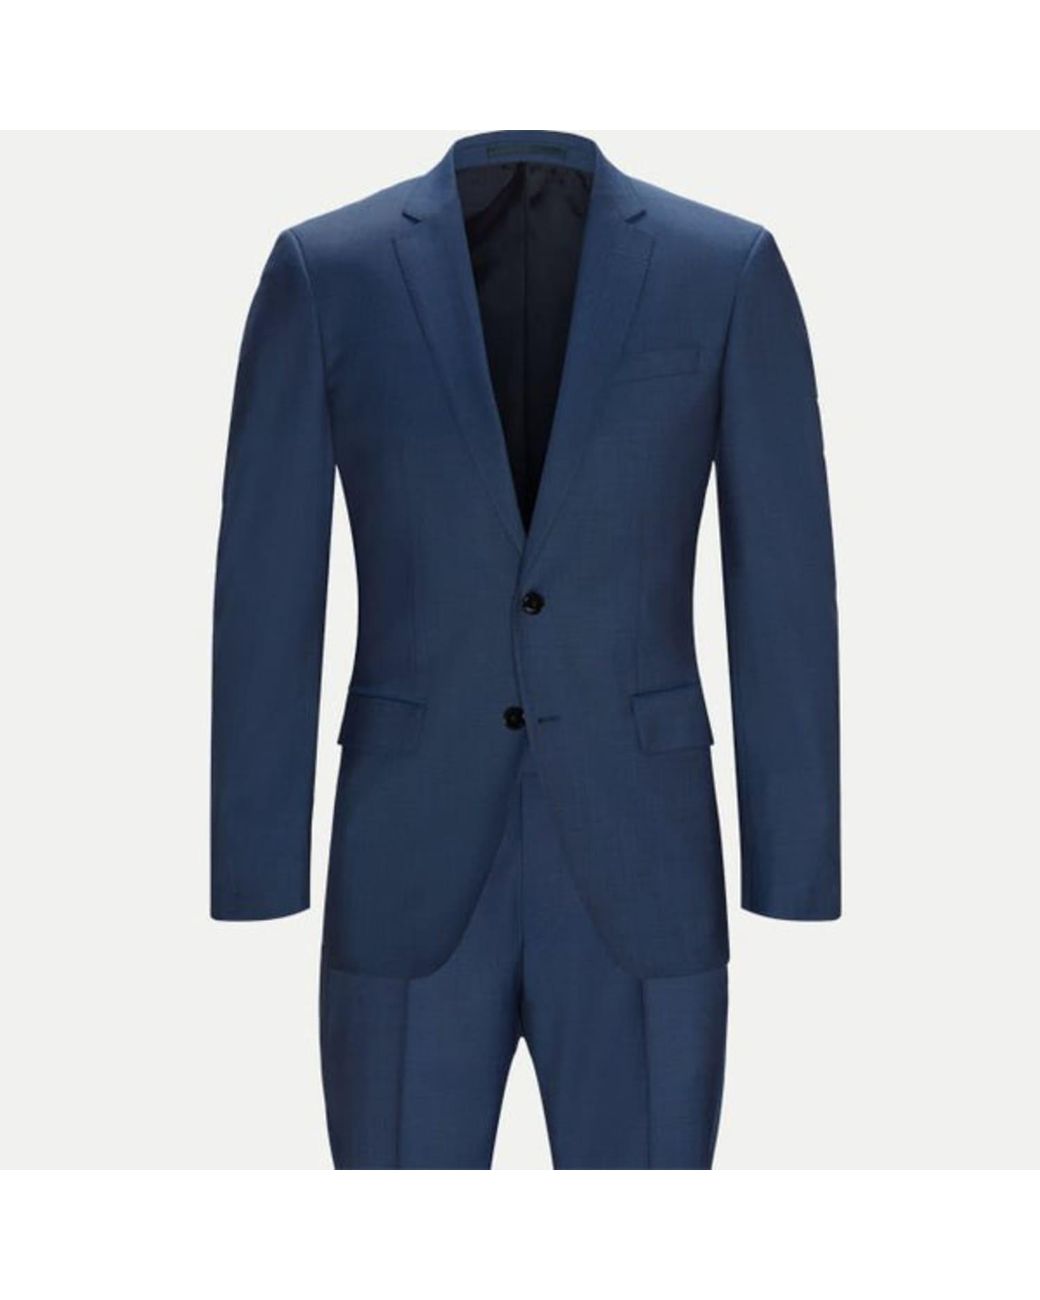 BOSS by HUGO BOSS Light Blue Slim Fit Wool Suit for Men | Lyst